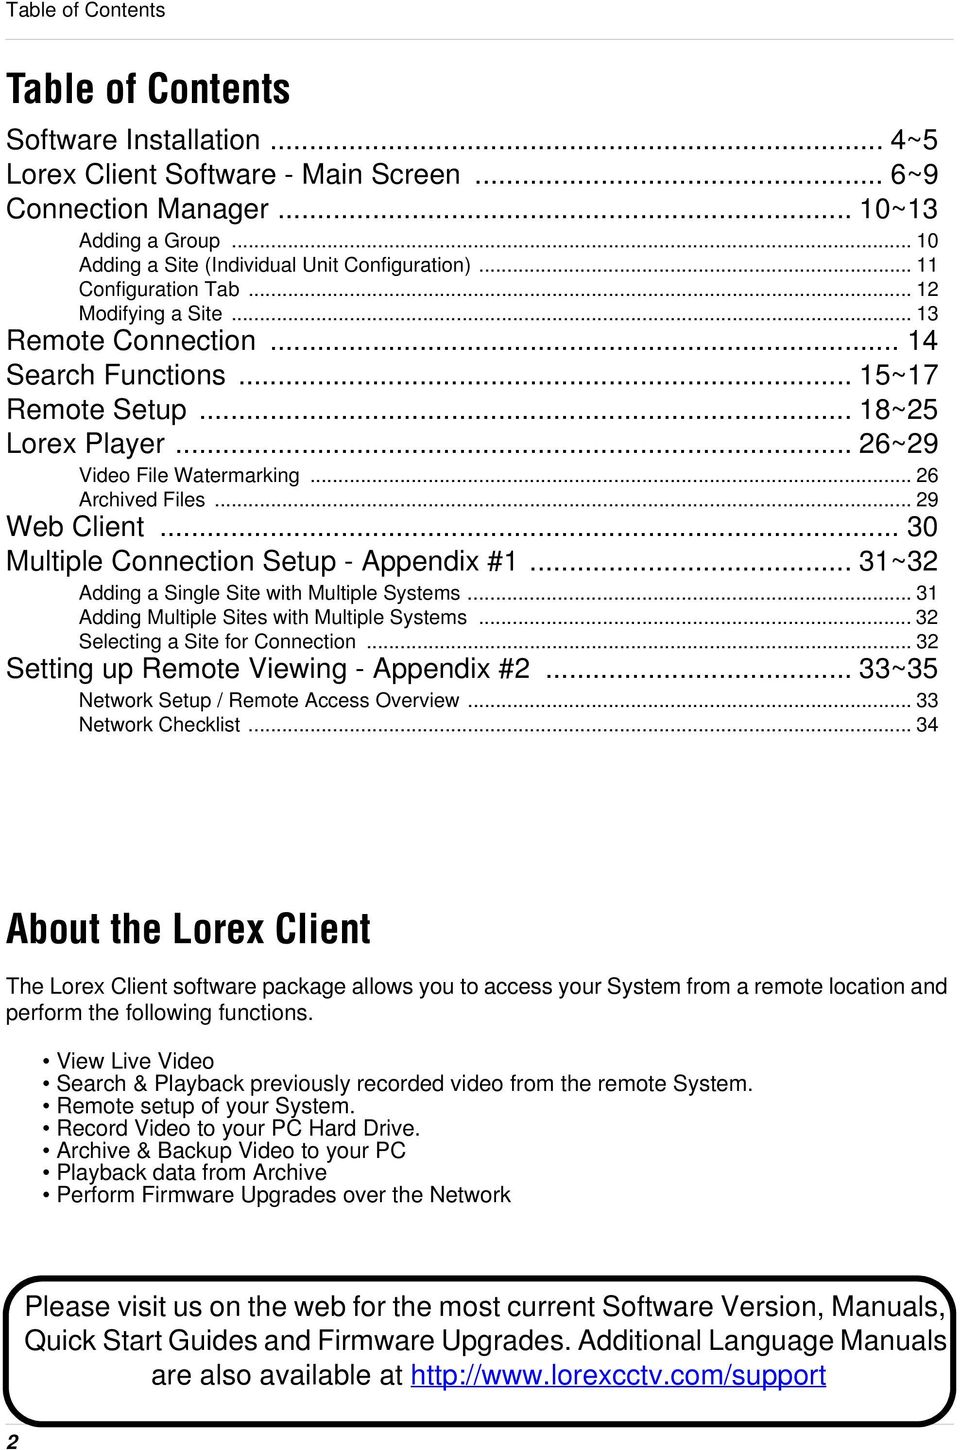 lorex client 11 software for mac